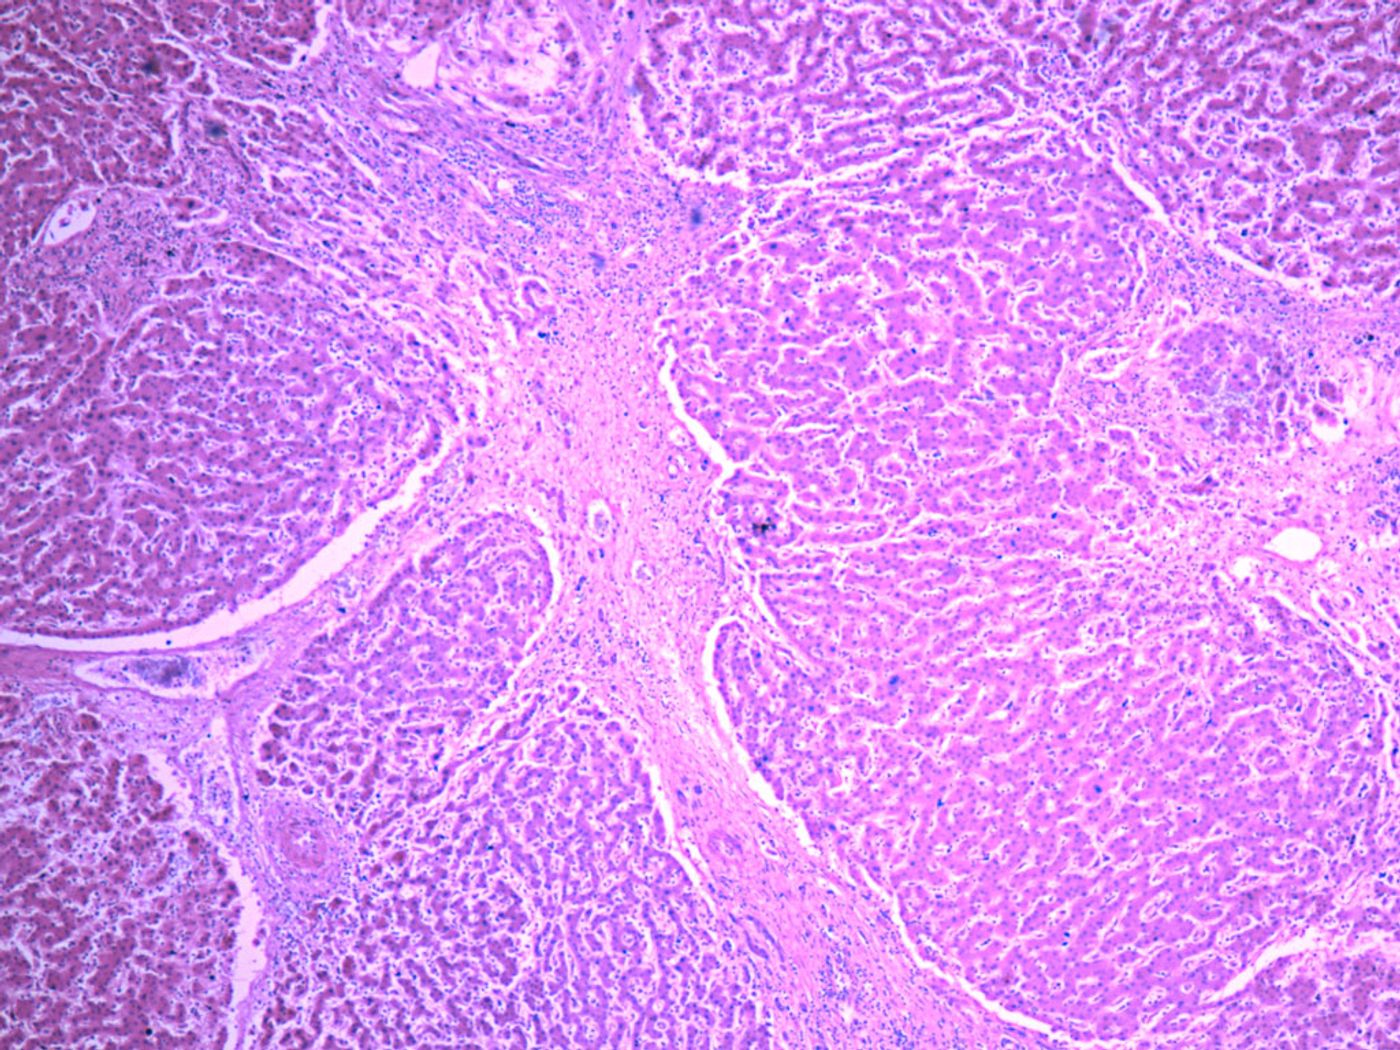 Damaged liver tissue due to cirrhosis | Image: Yale